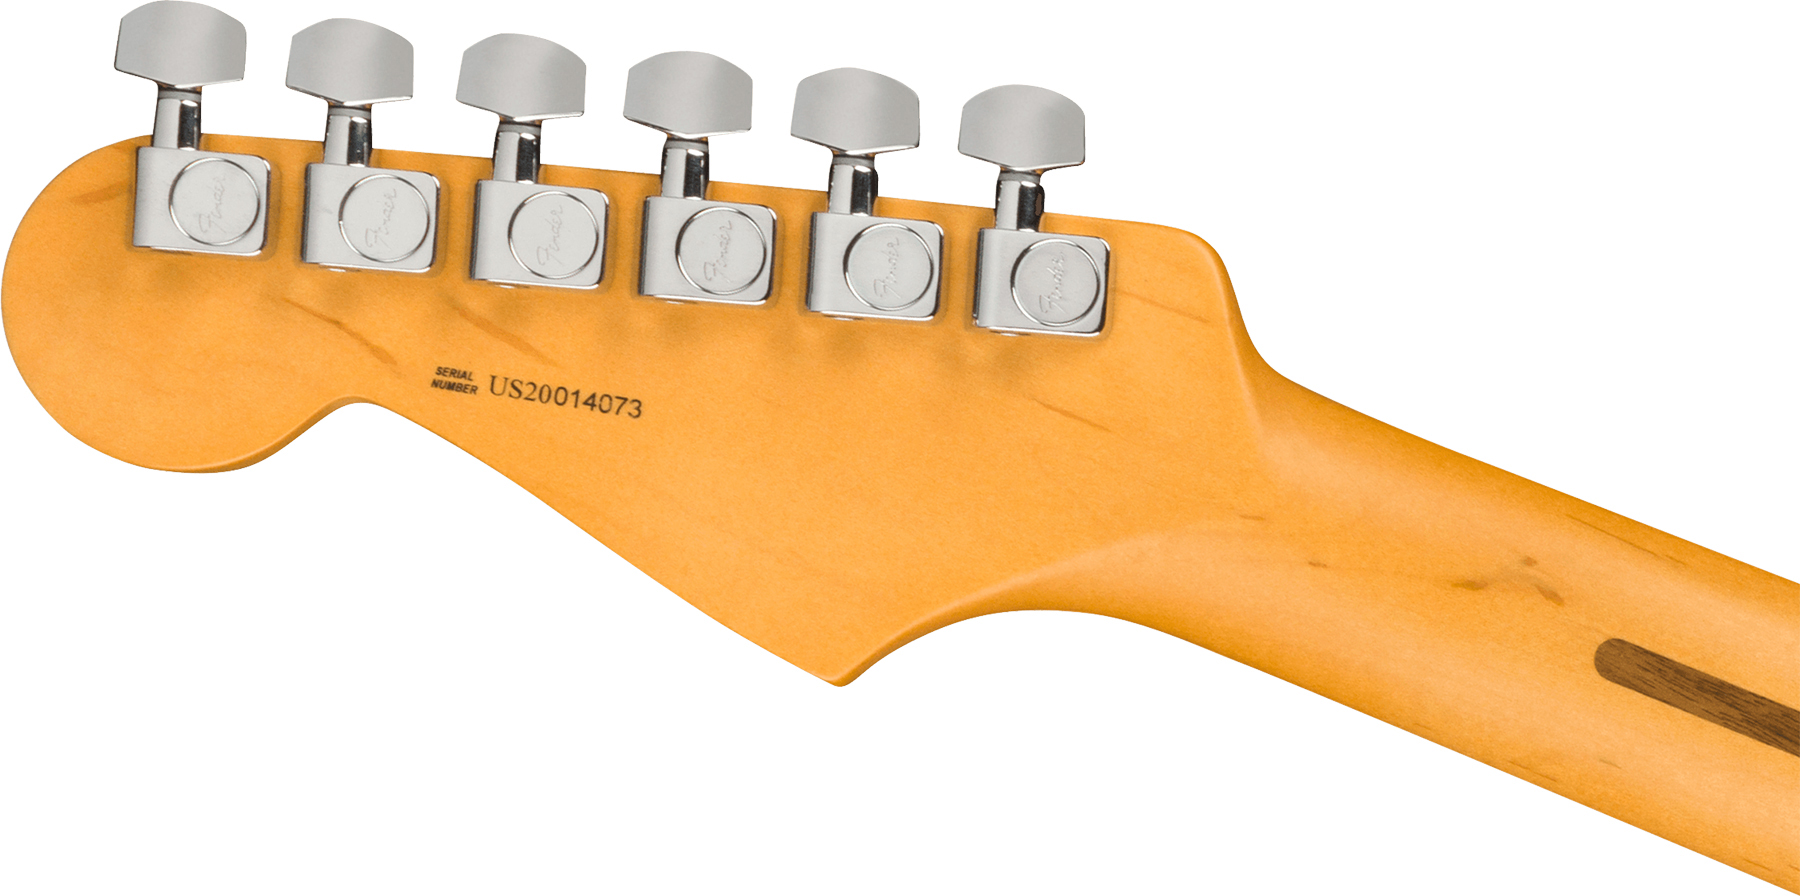 Fender Strat American Professional Ii Usa Mn - Roasted Pine - Str shape electric guitar - Variation 3